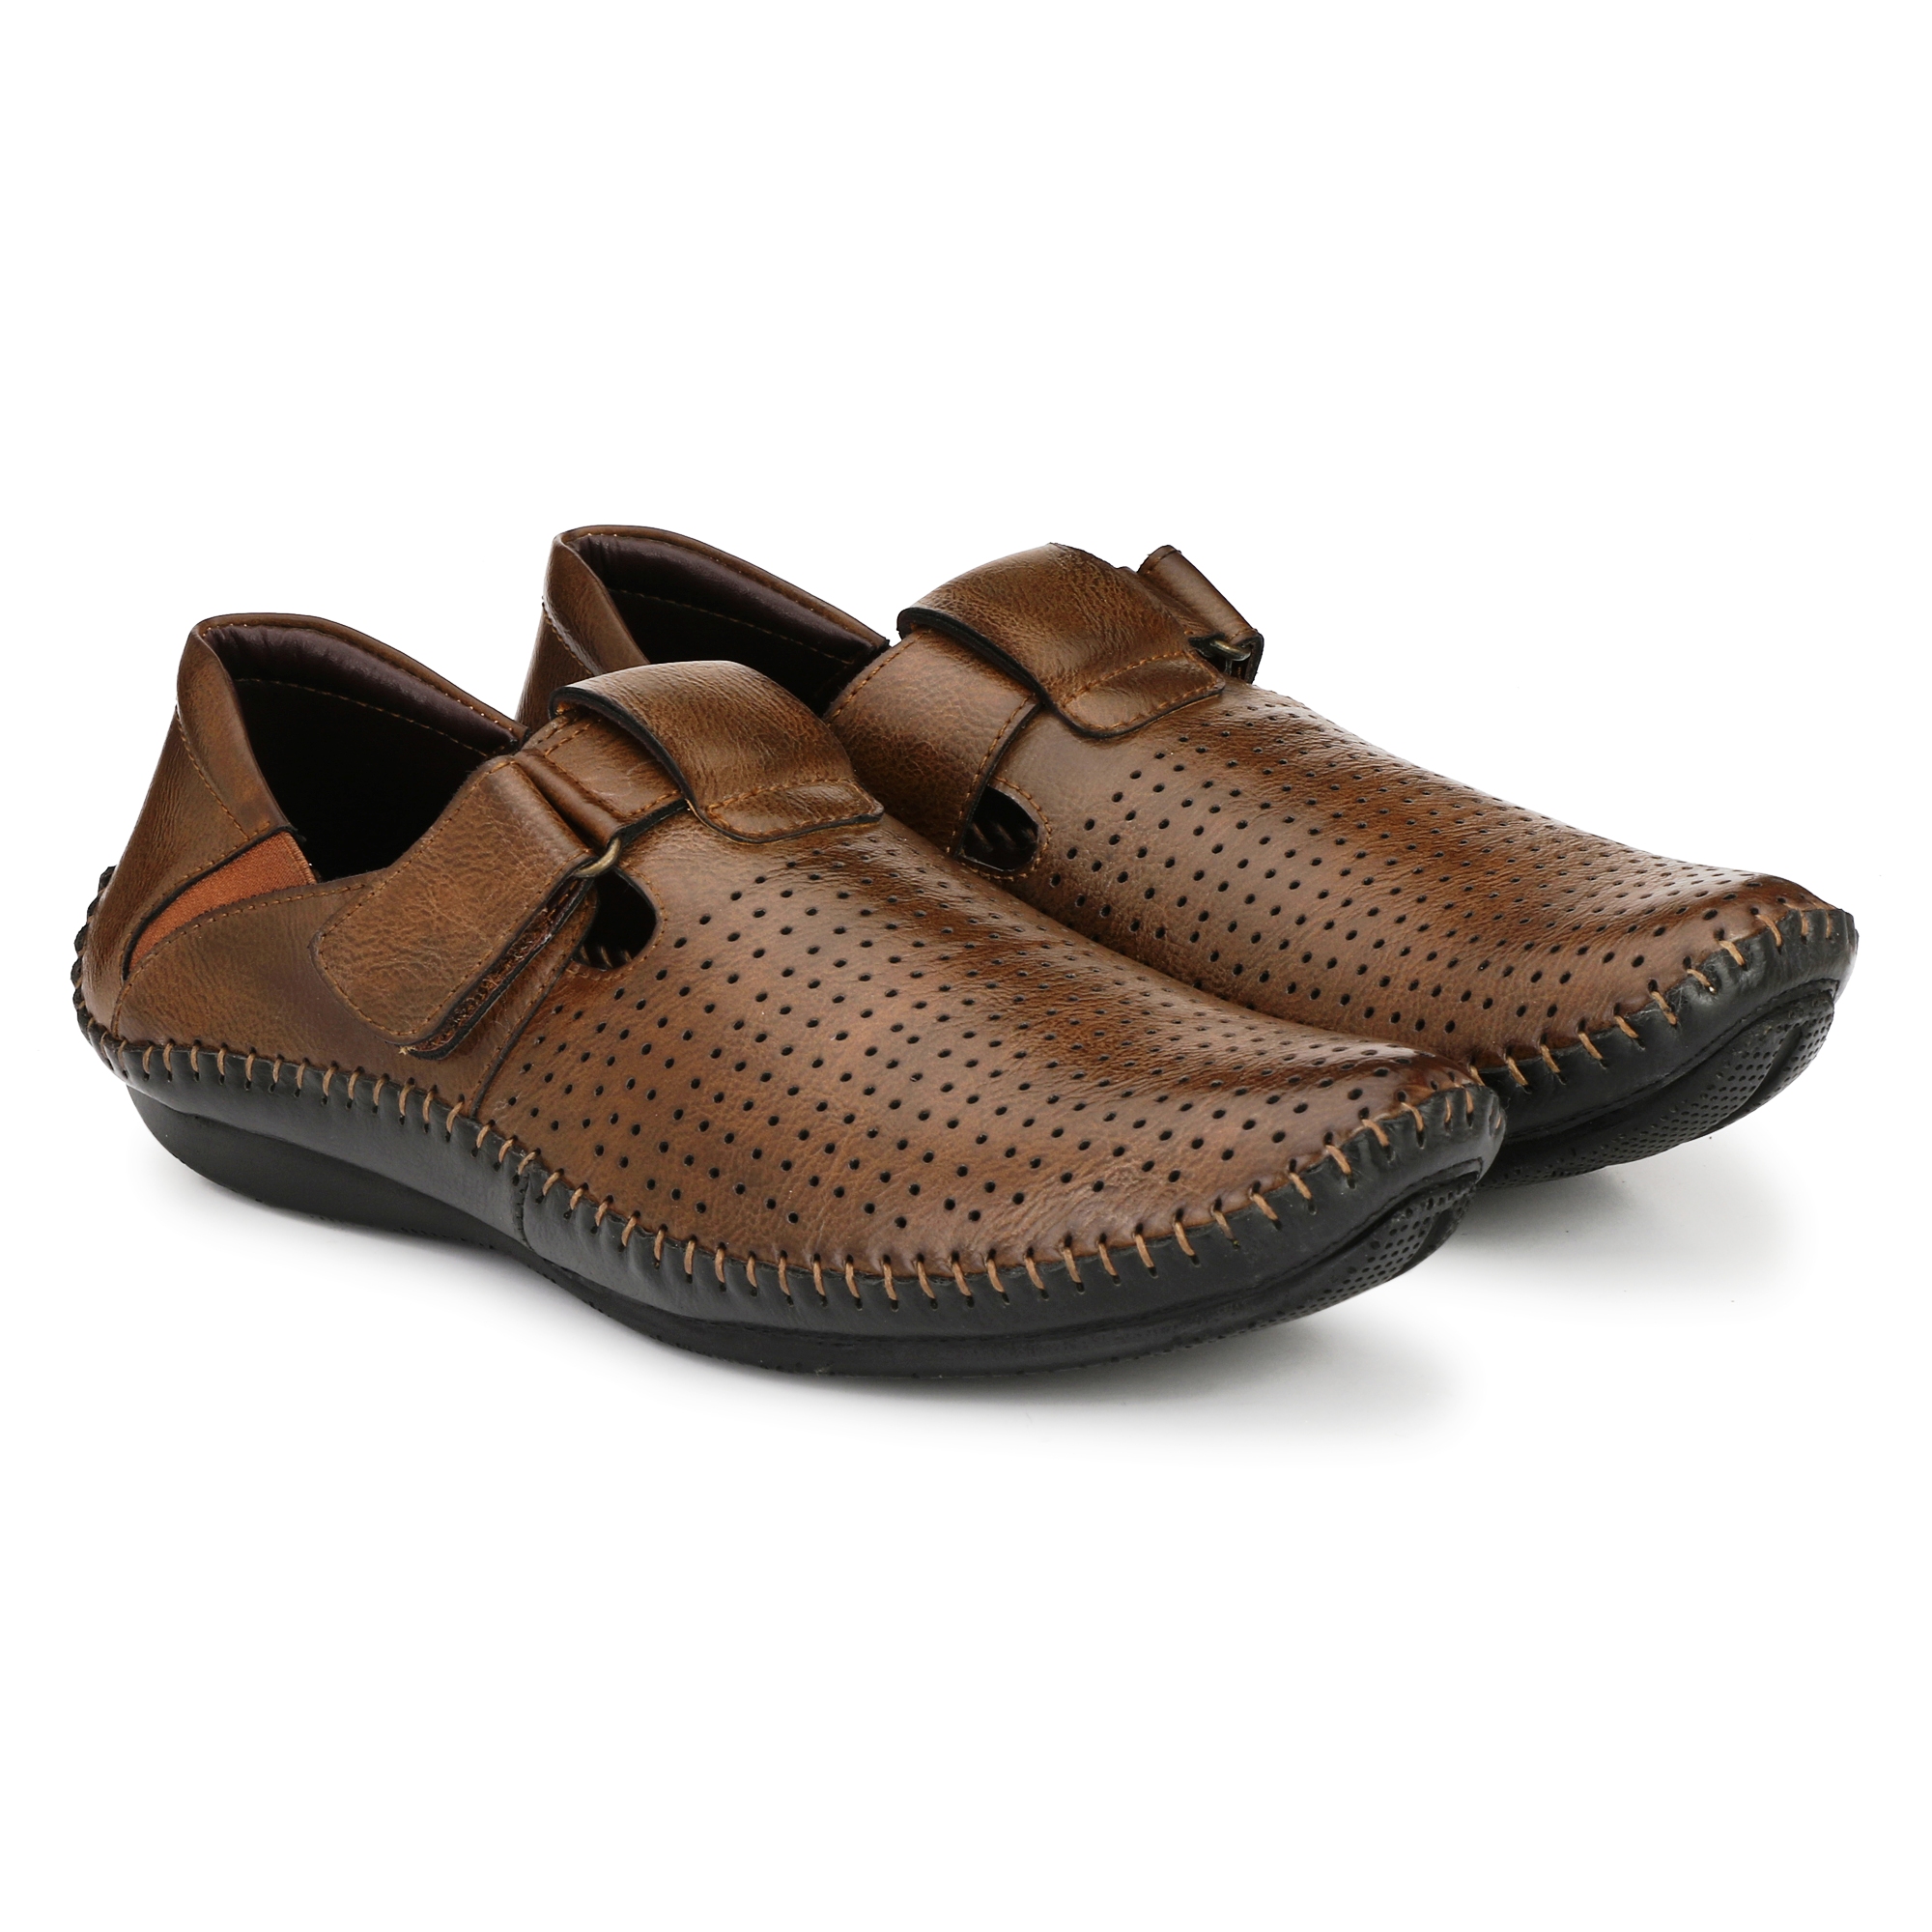 Buy Boggy Confort Sandals For Men Online @ ₹499 from ShopClues